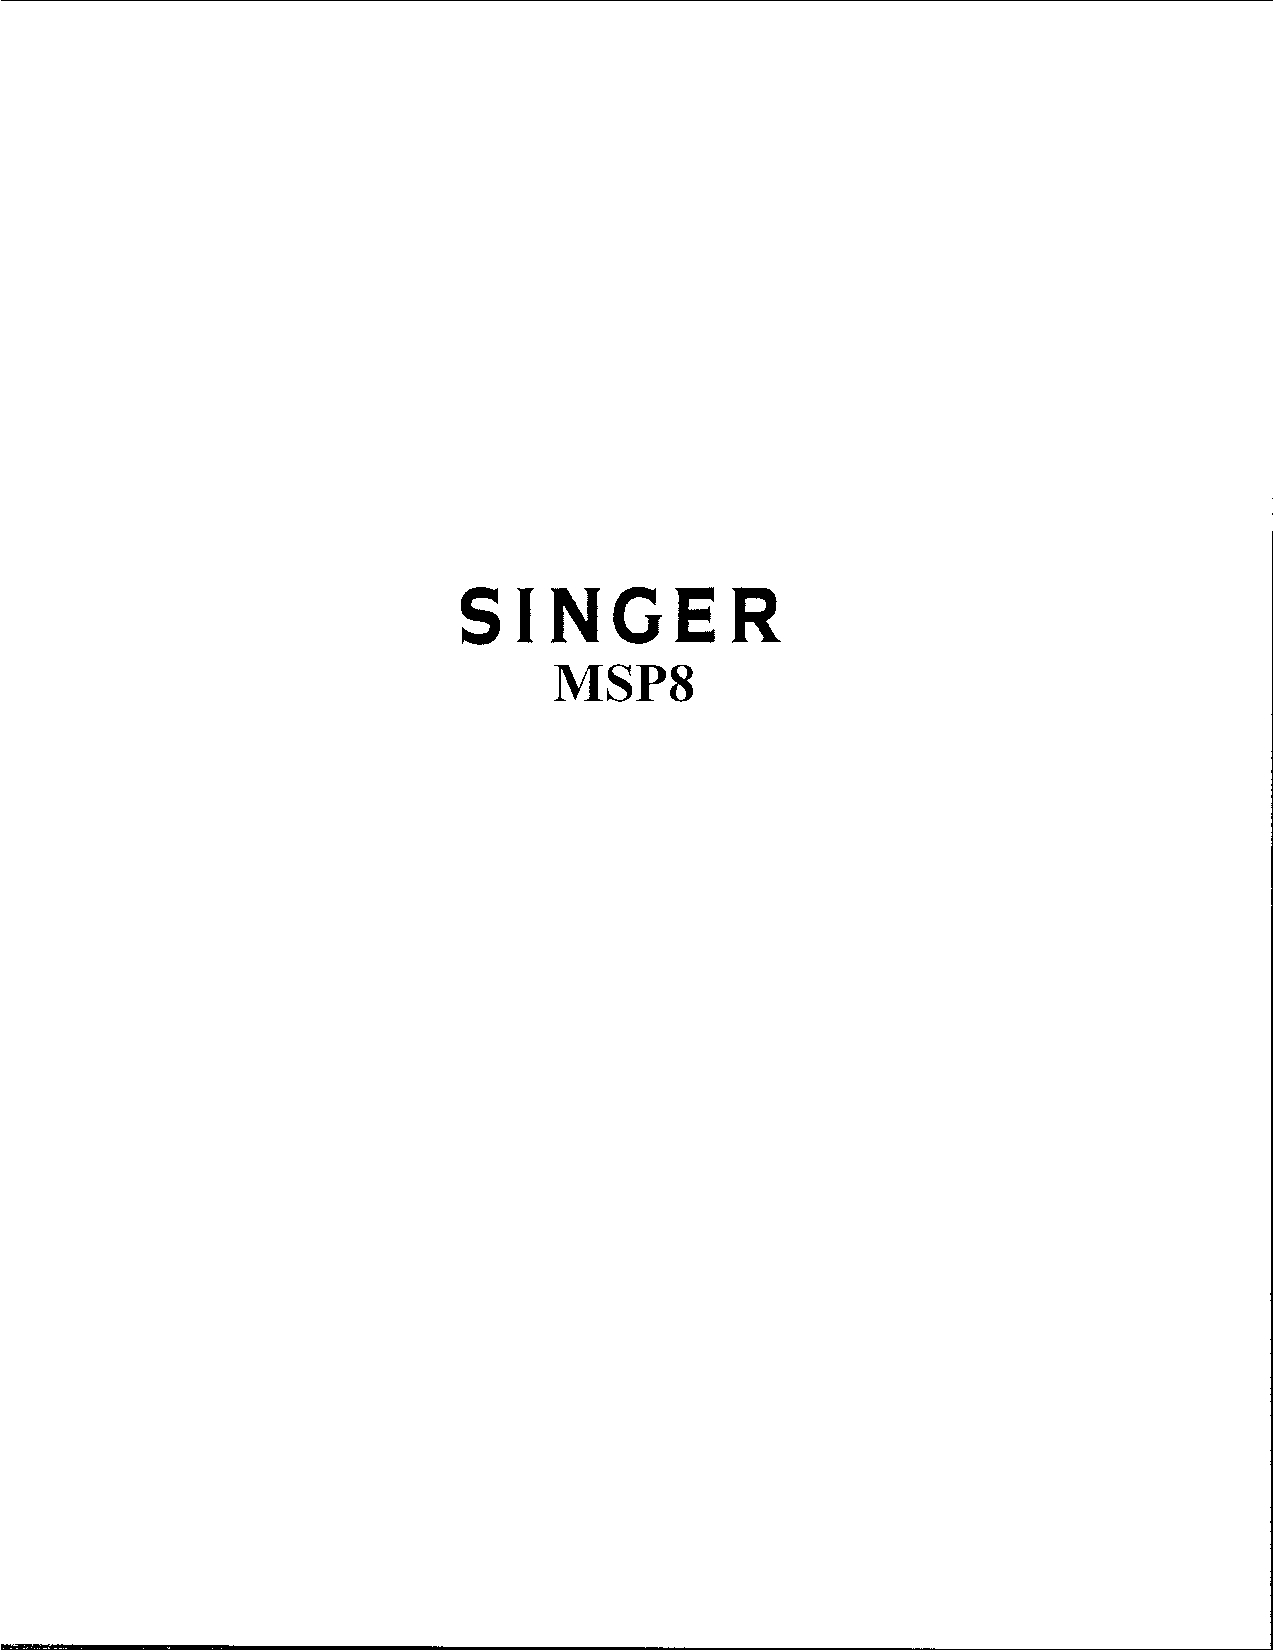 Singer MSP8 User Manual